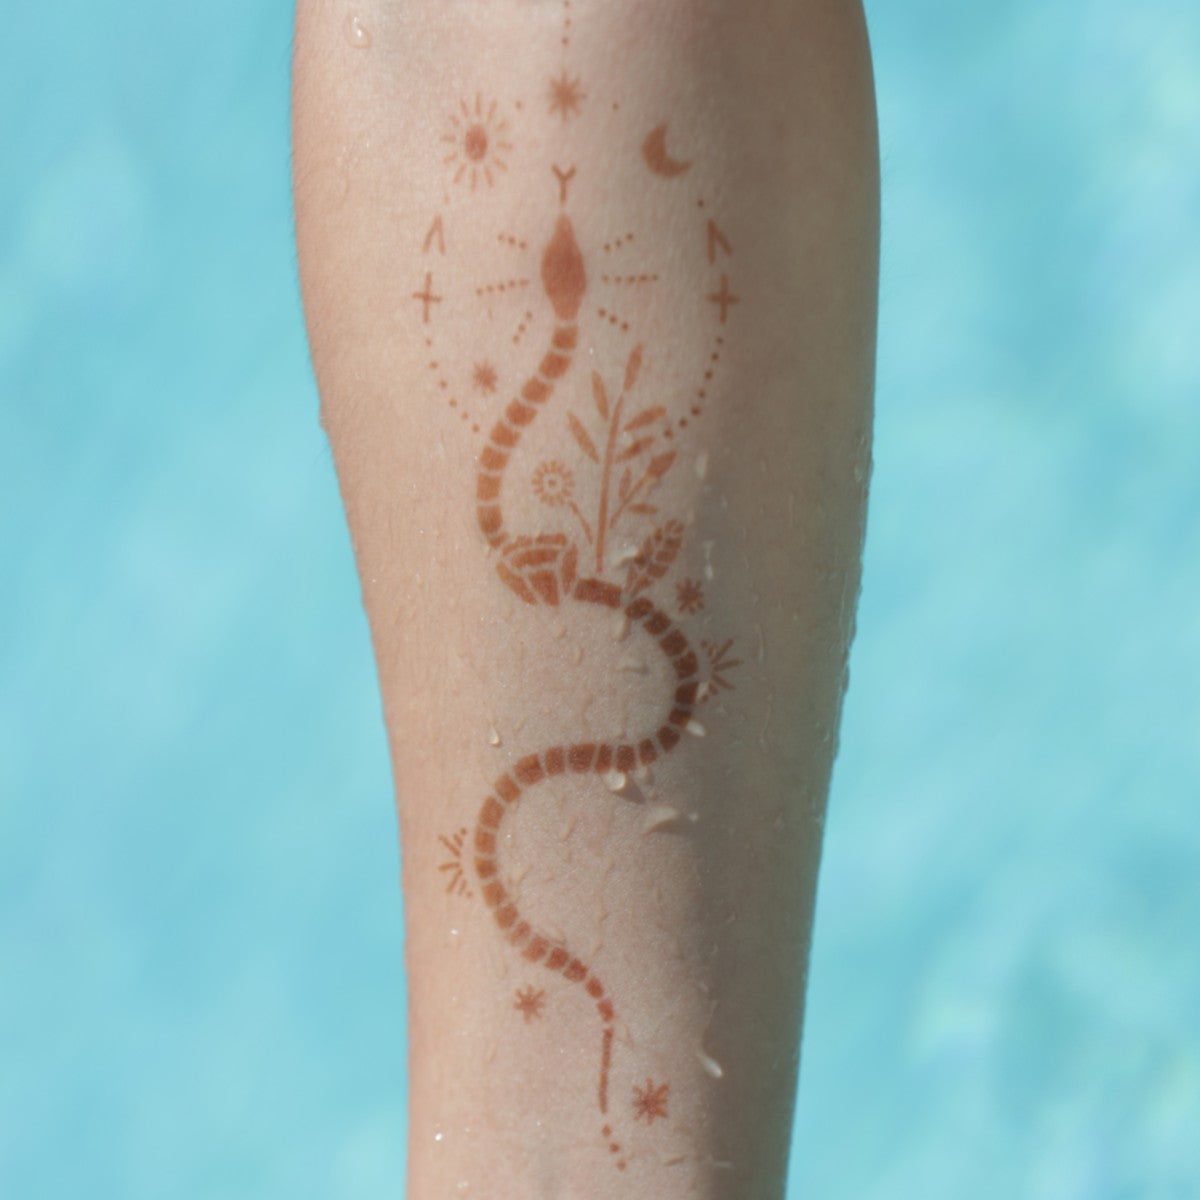 henna leg tattoo designs